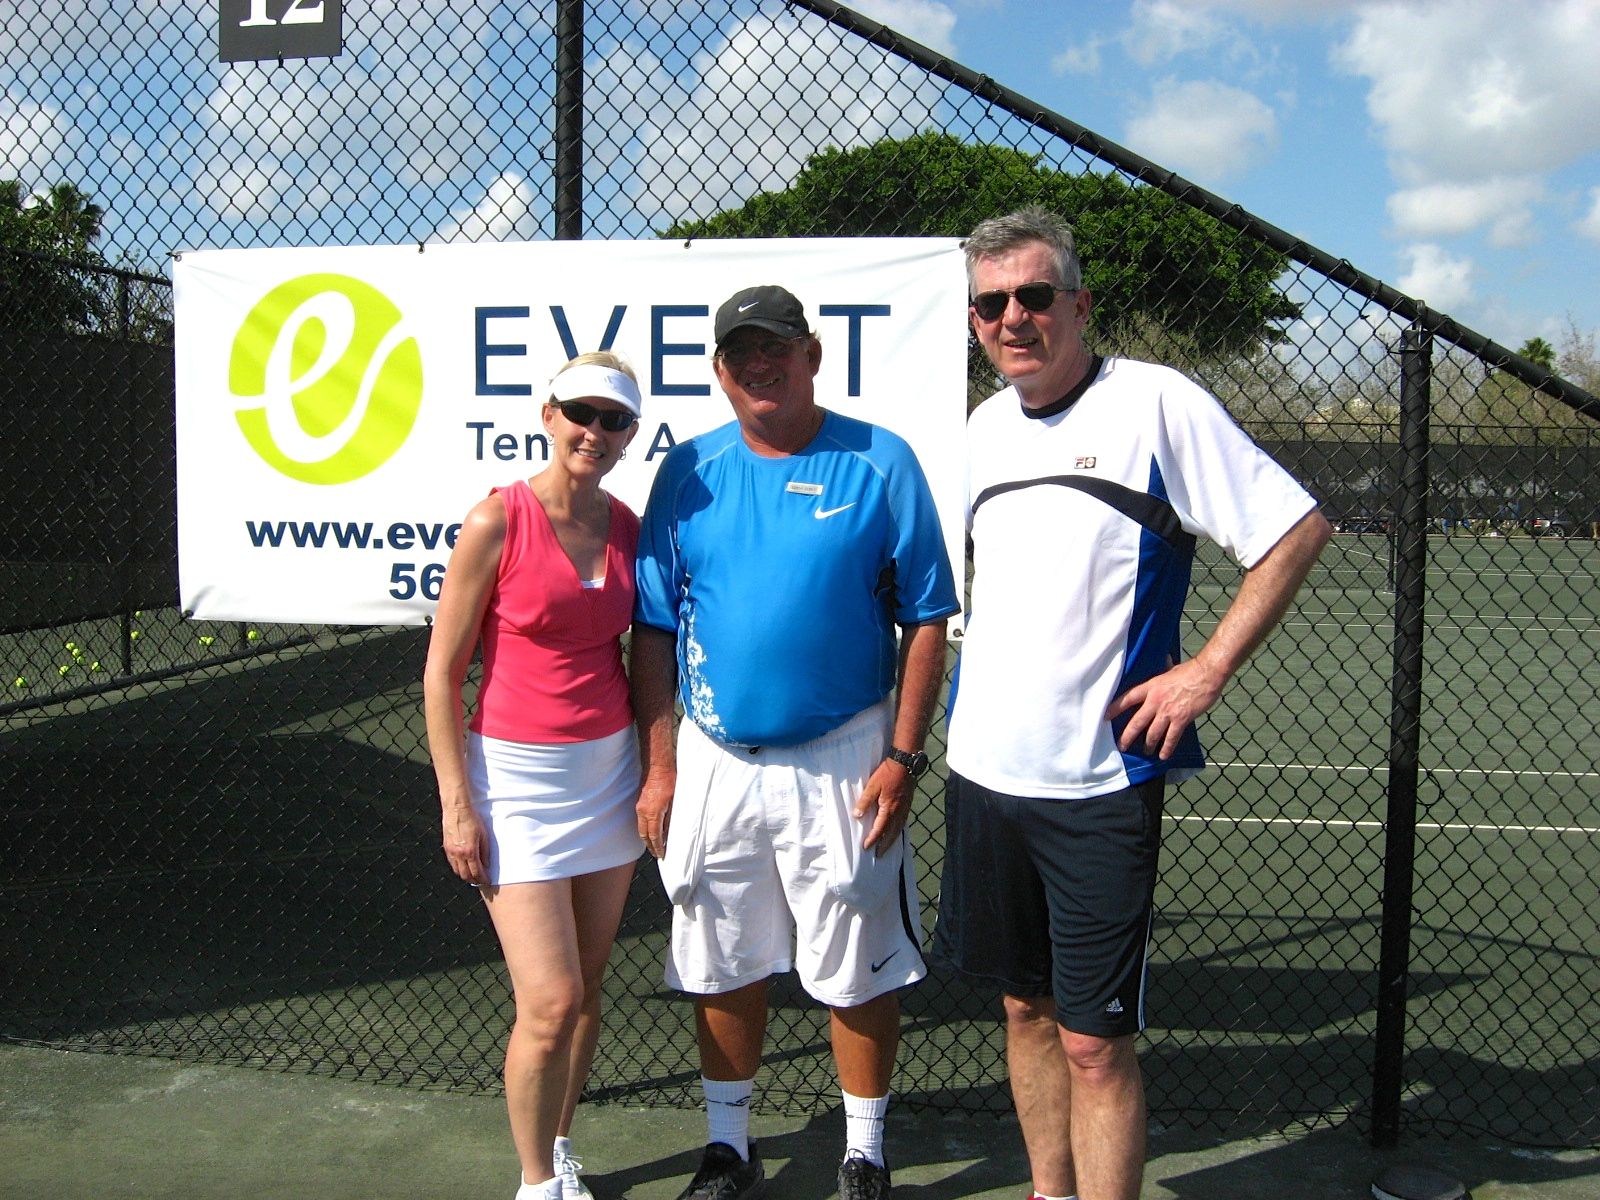 tennis-tourist-Evert-Adult-Tennis-Academy-Drew-Evert-Boca-Raton-Florida-teri-church